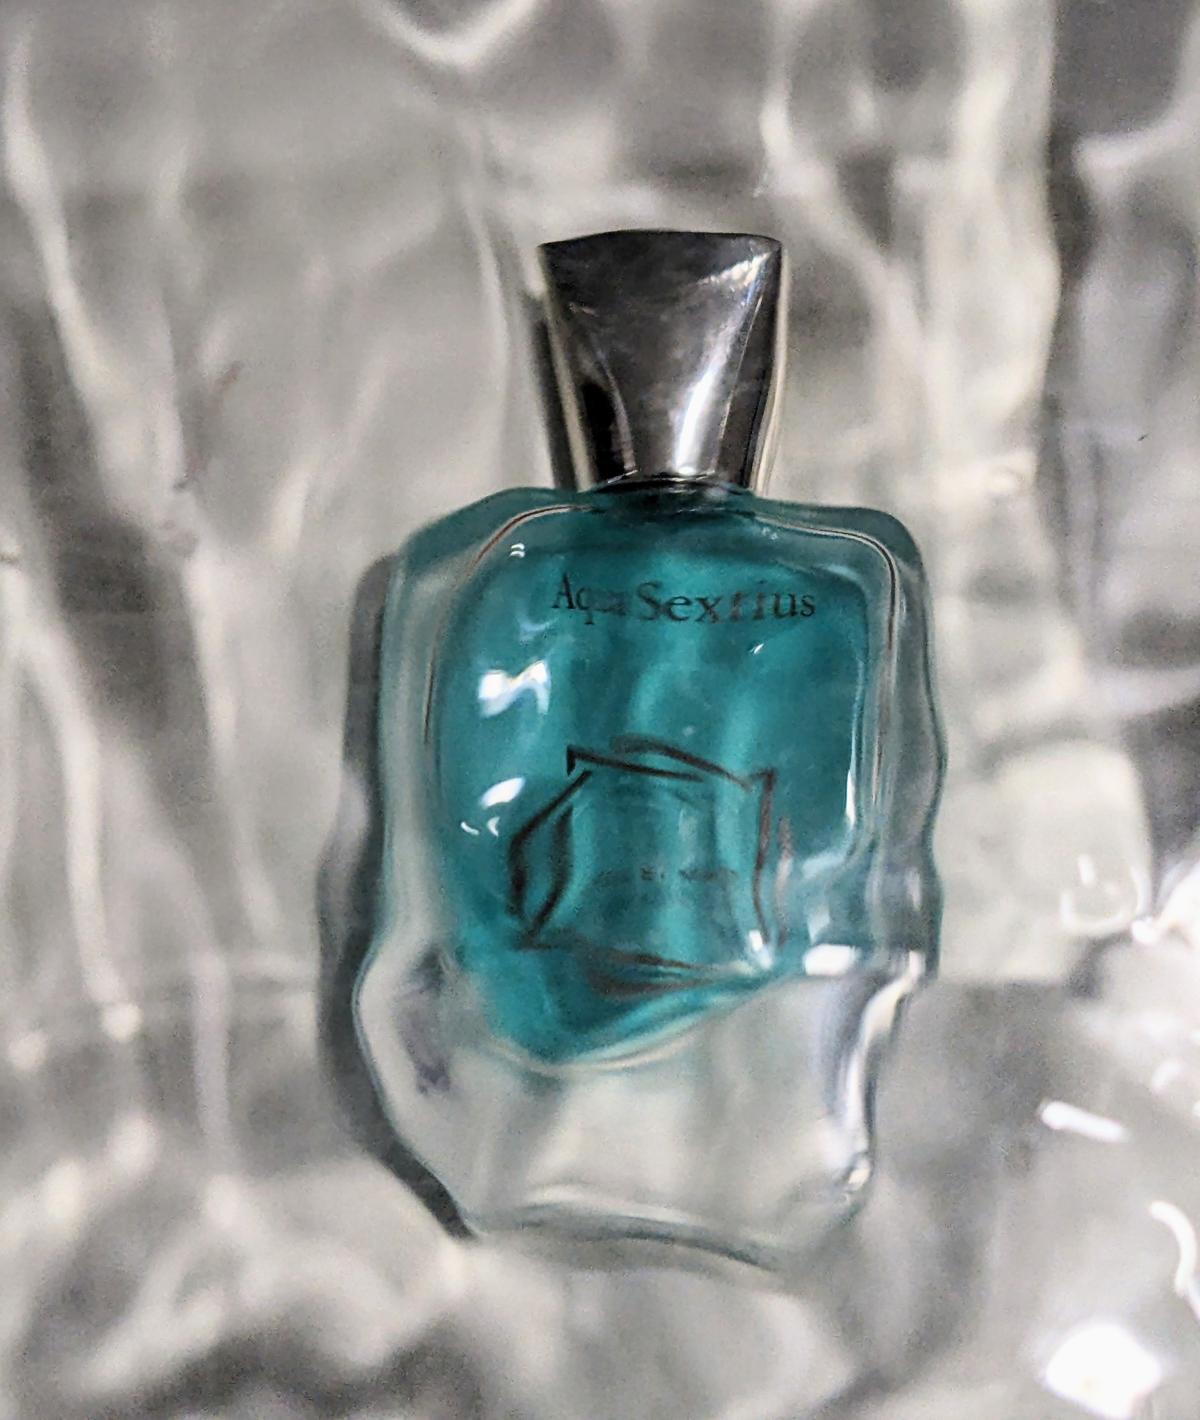 Aqua Sextius Jul et Mad Paris perfume - a fragrance for women and men 2014